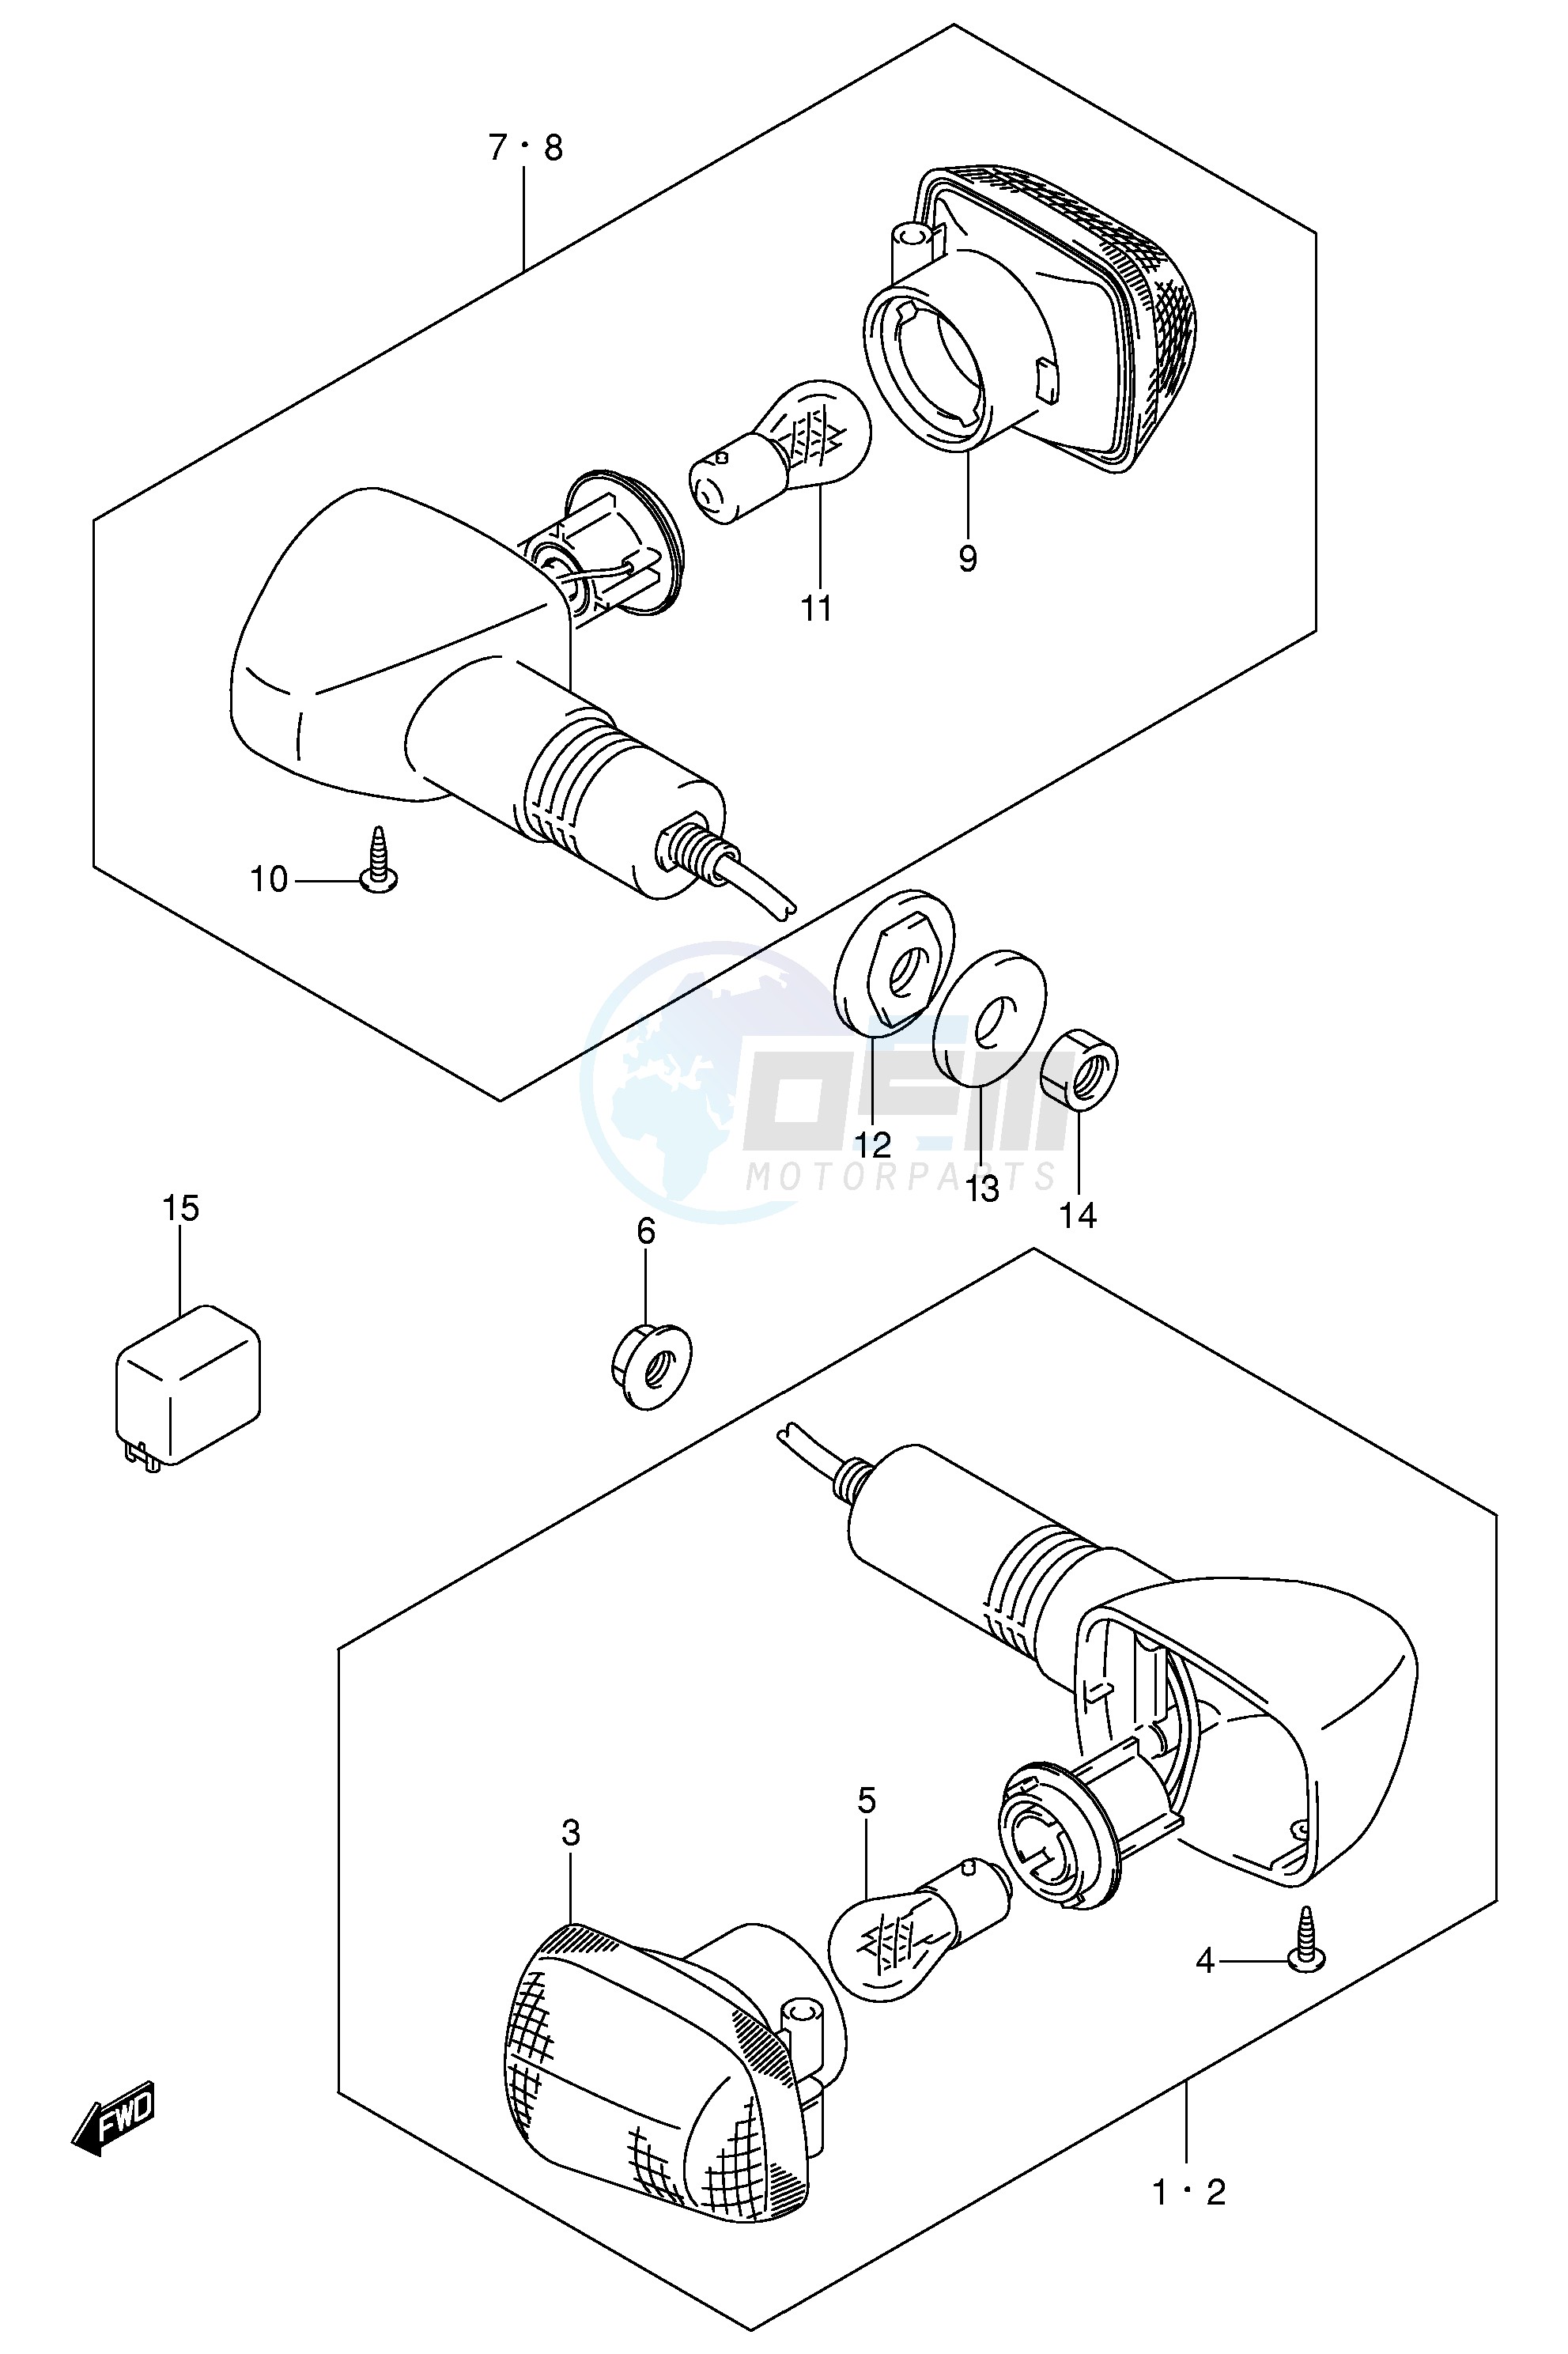 TURNSIGNAL LAMP (E24,F.NO.100197~) blueprint